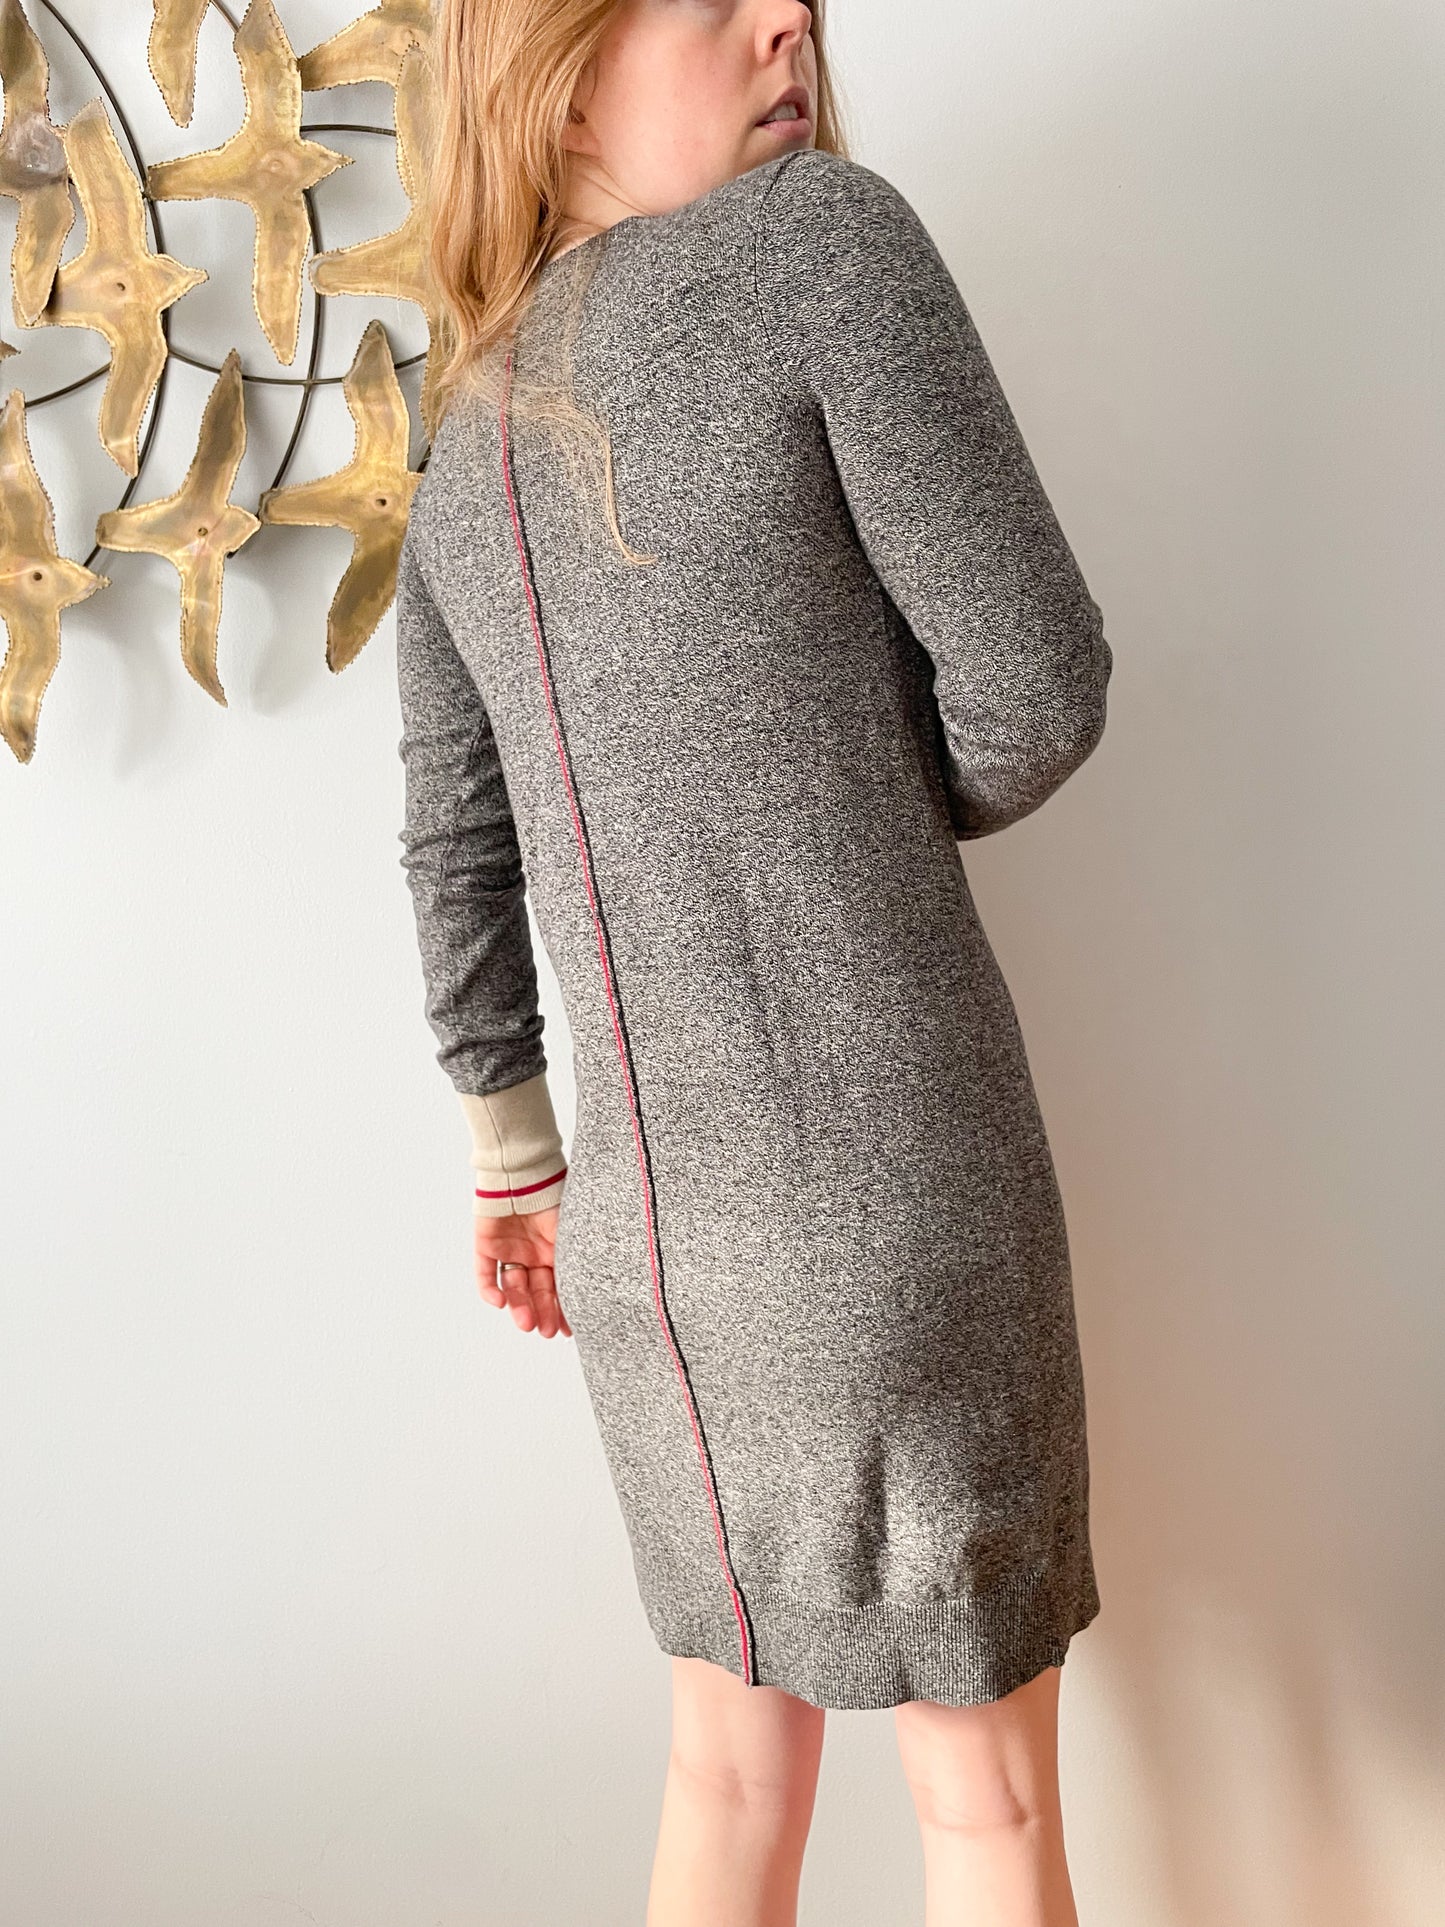 Roots Grey Long Sleeve Knit Sweater Dress - XS/S/M